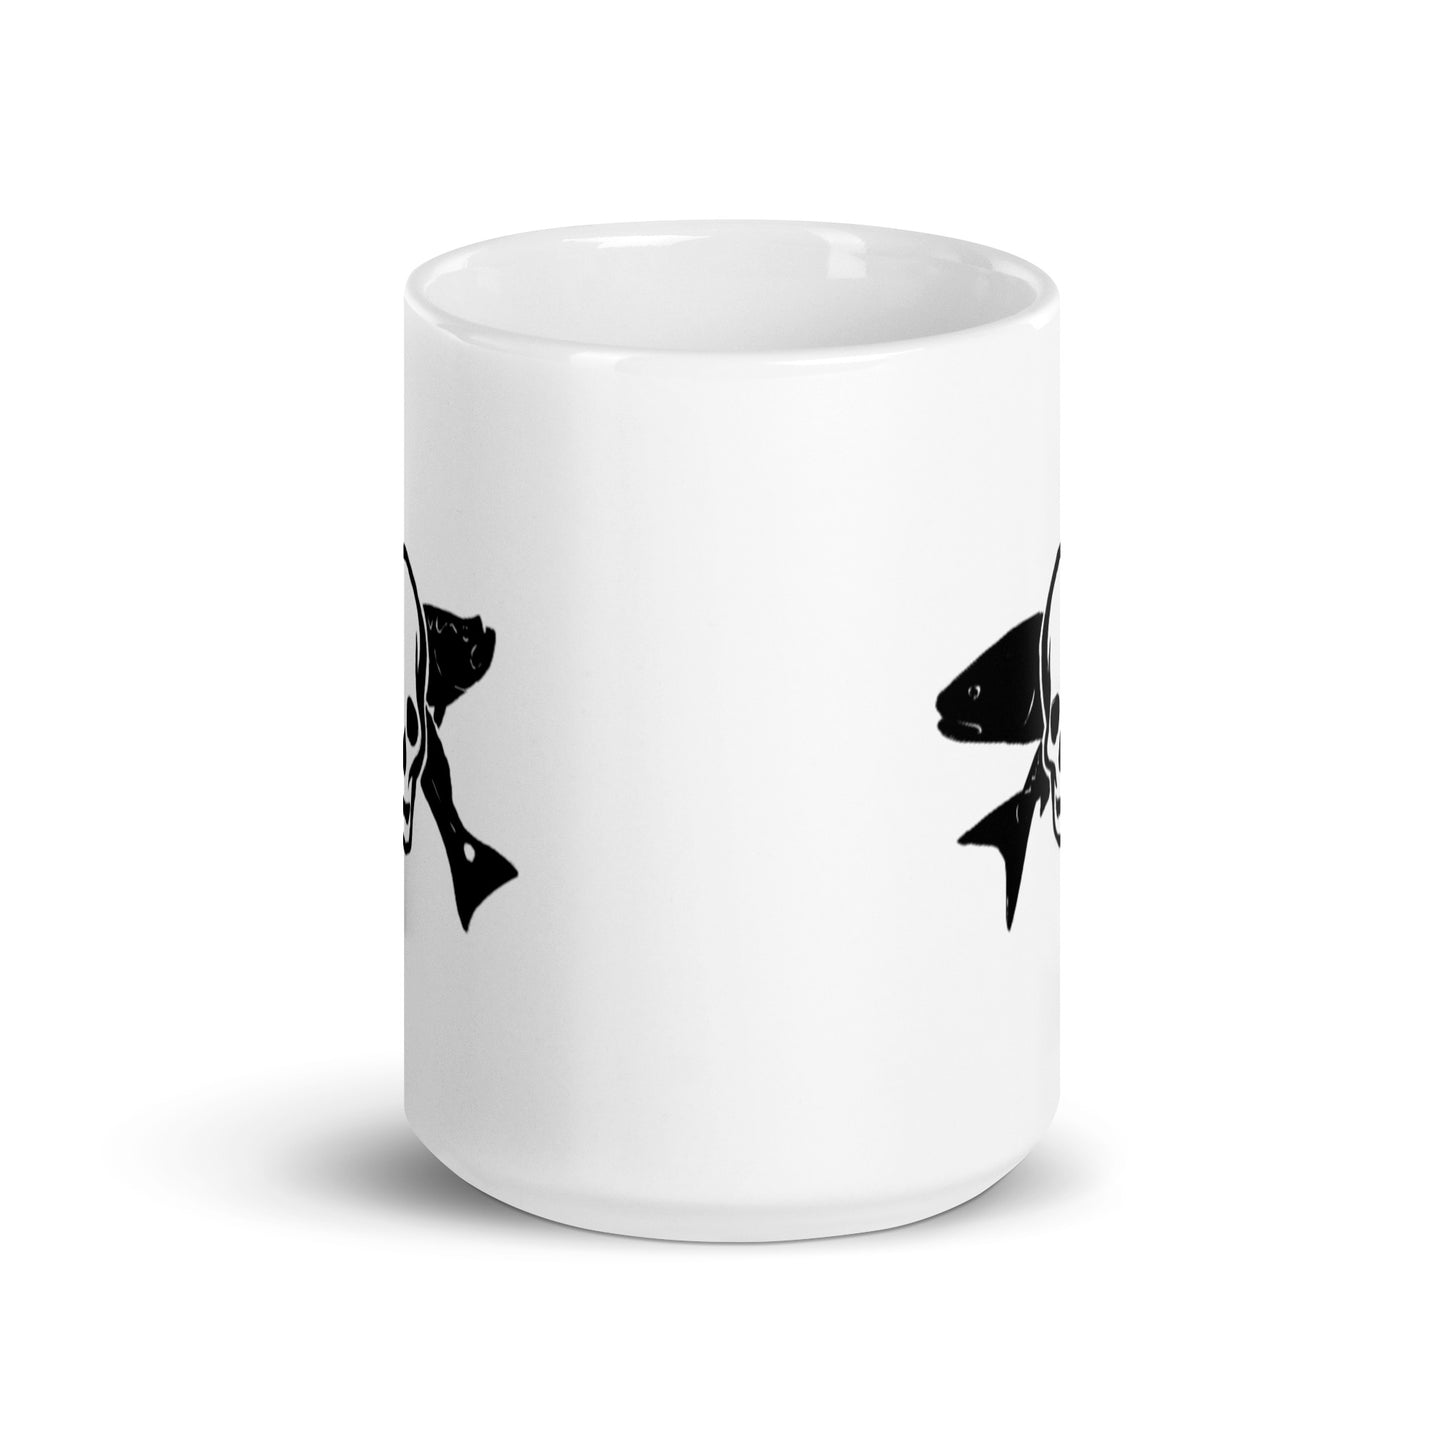 Inshore Skull Coffee Mug